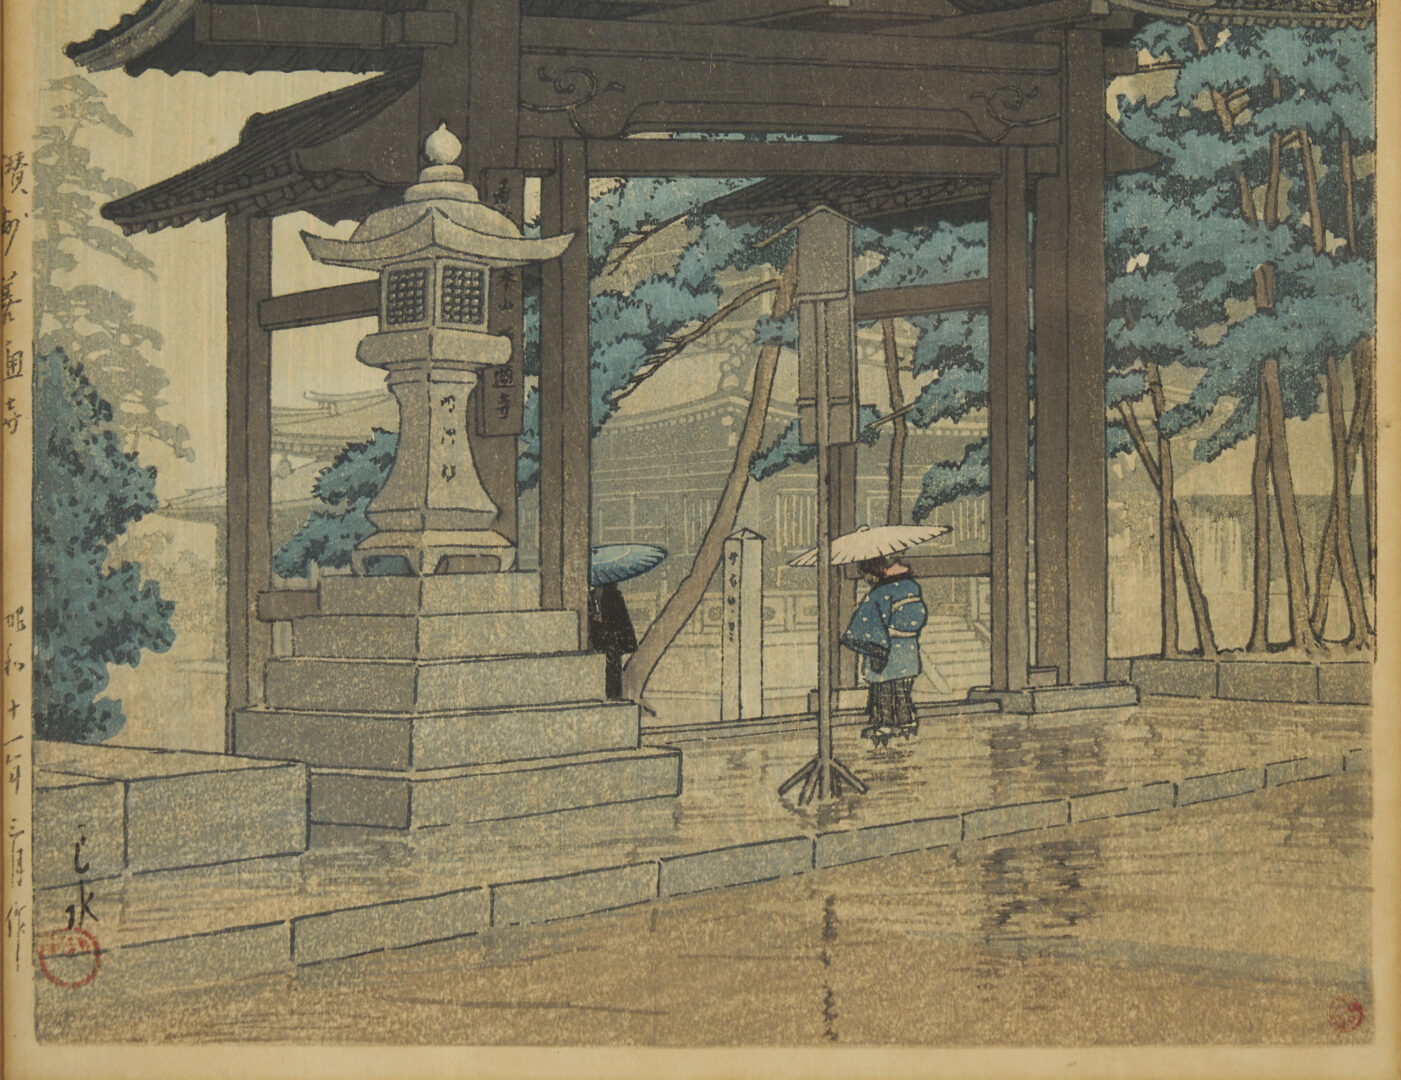 Lot 238: Hasui Kawasi Japanese Woodblock Print, Zentsuji Temple in Rain